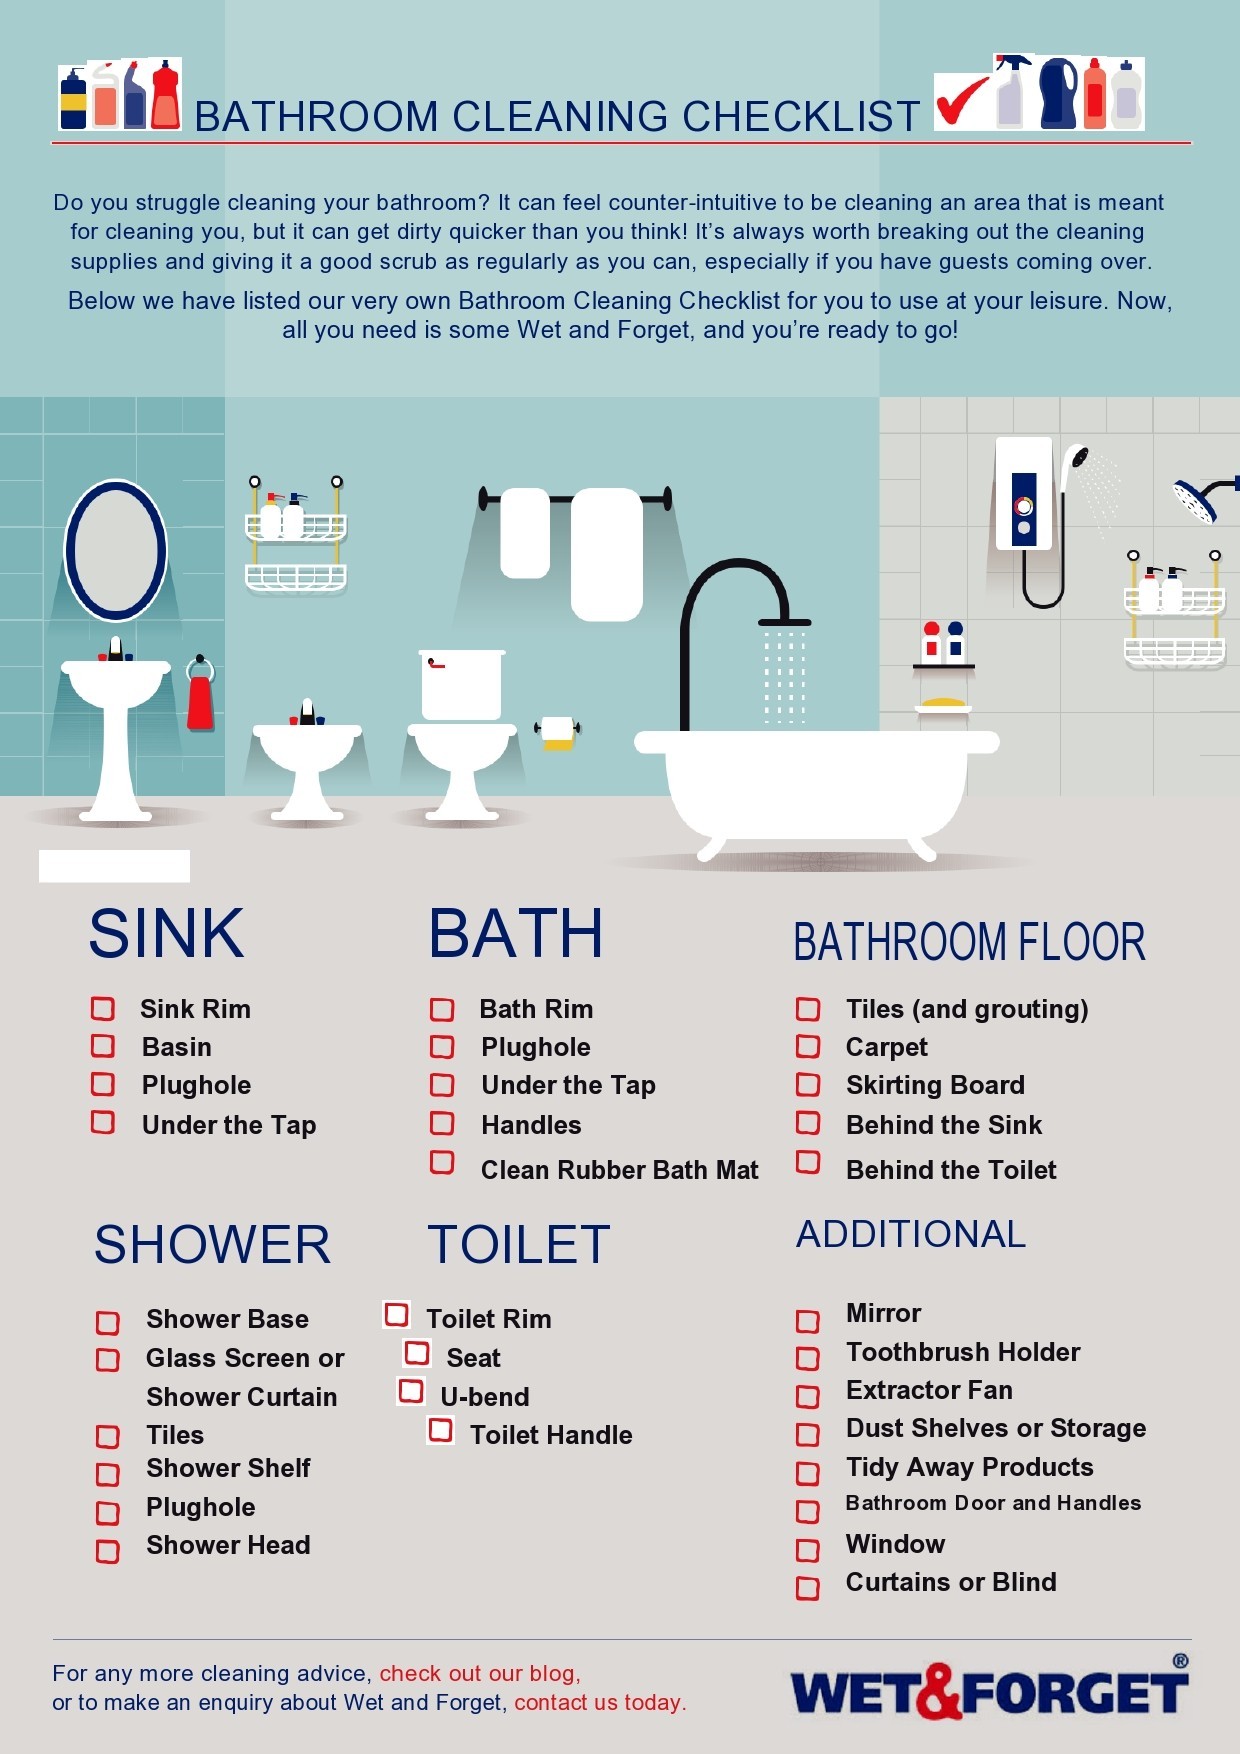 49 Printable Bathroom Cleaning Checklists [Word] ᐅ TemplateLab